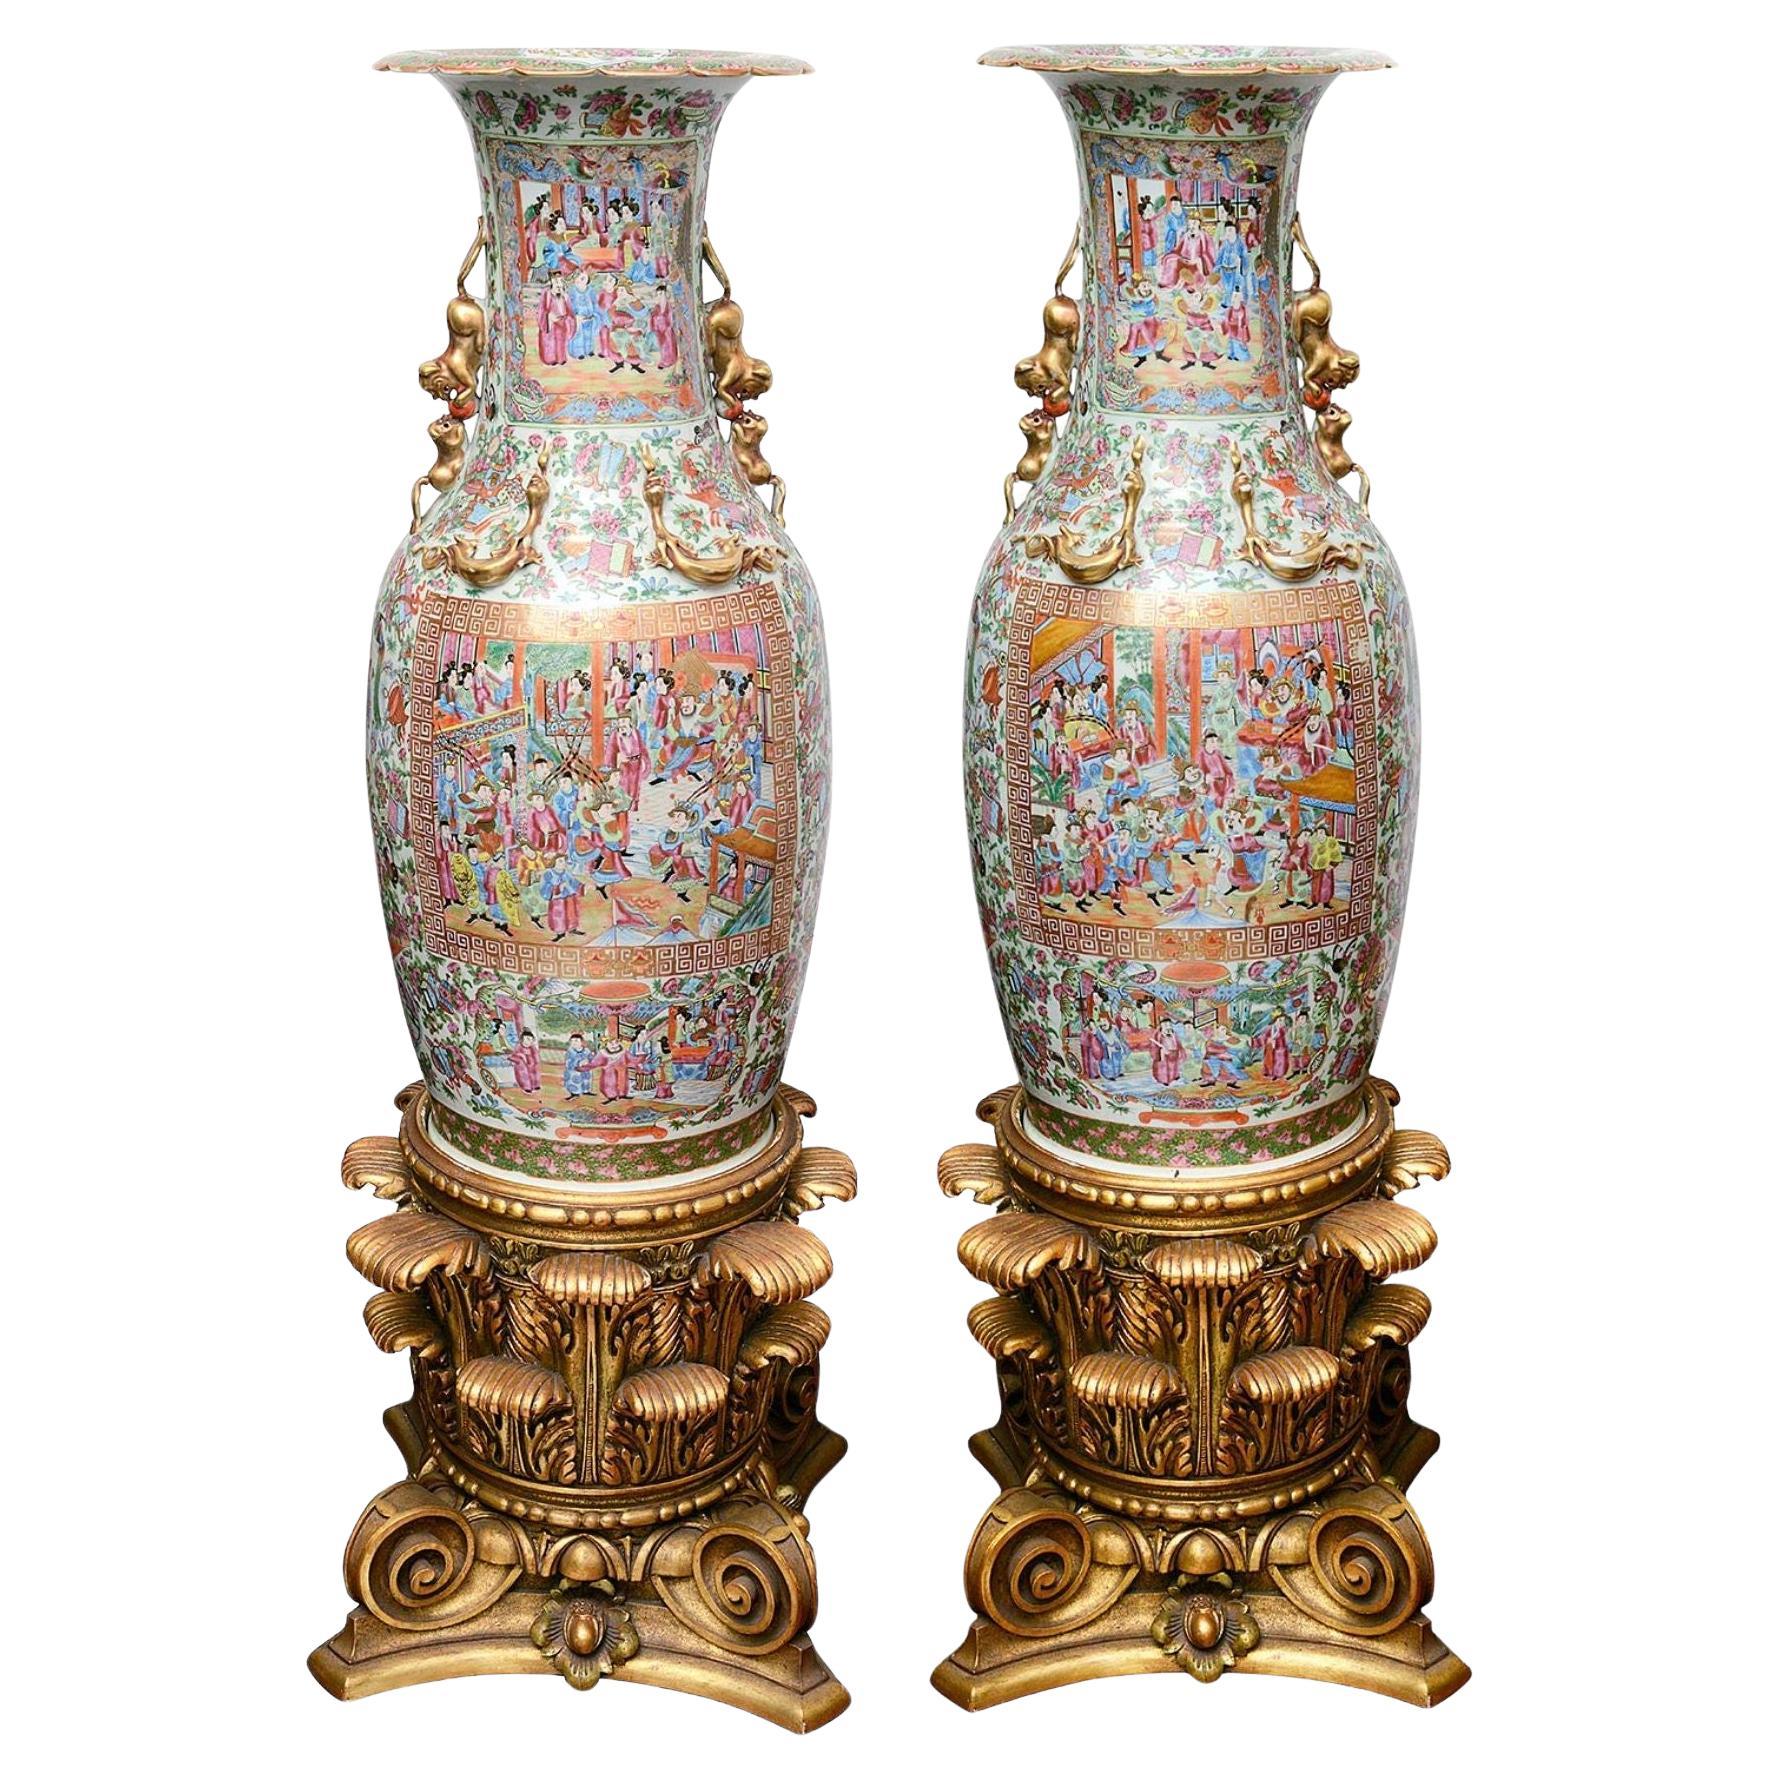 Großes Paar Rosenmedaillon-Vasen des 19. Jahrhunderts auf Ständern.